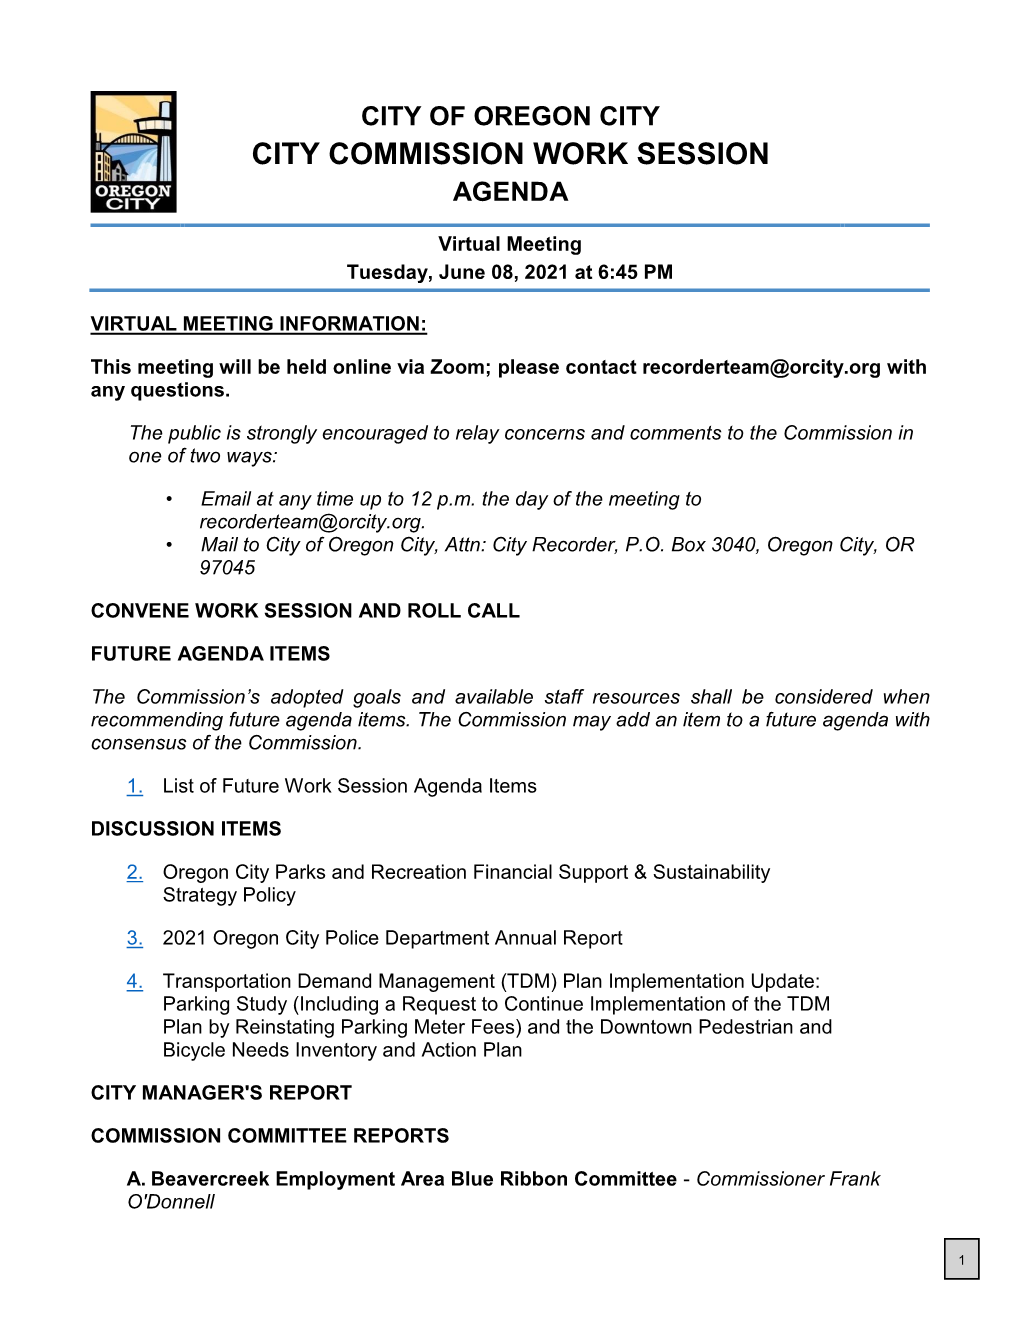 City Commission Work Session Agenda